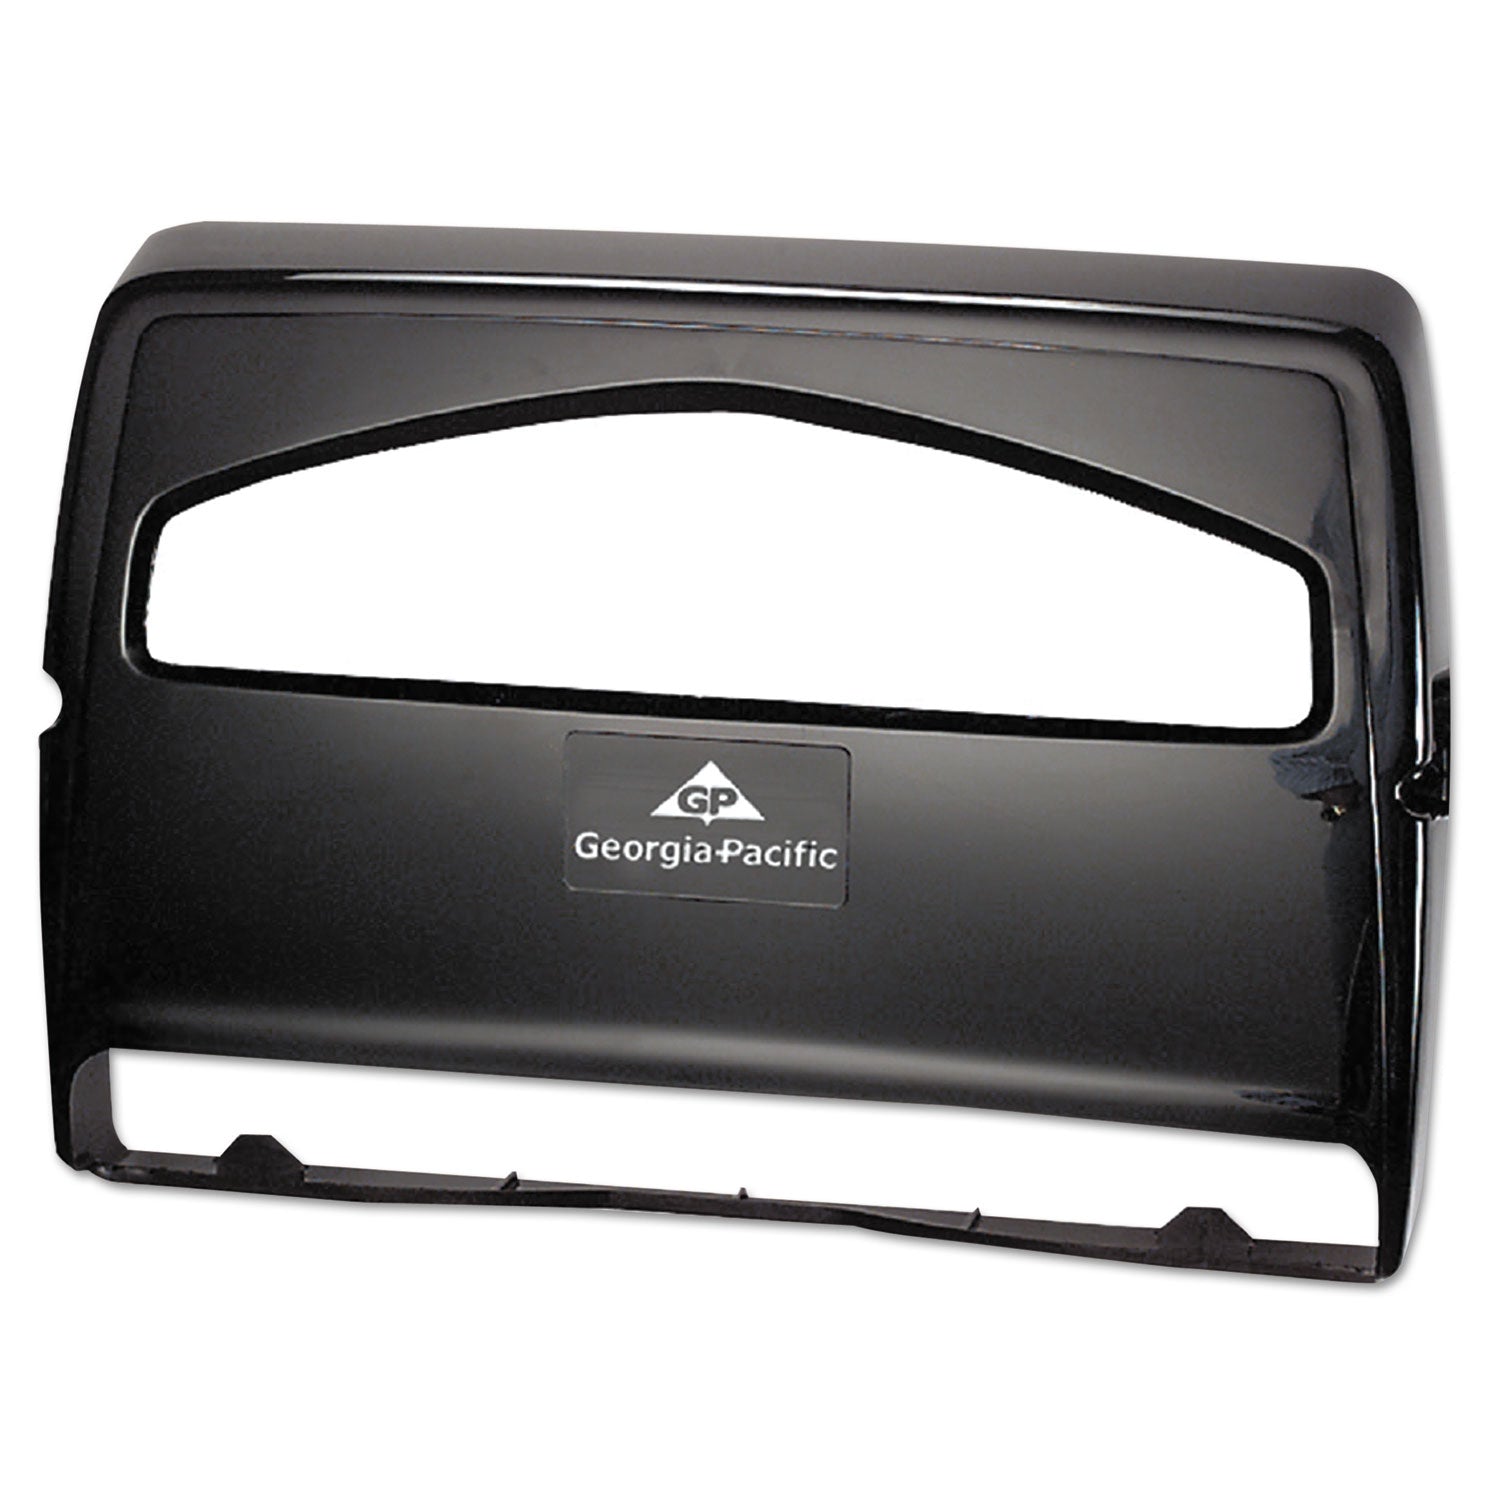 Safe-T-Gard Toilet Seat Cover Dispenser, Half-Fold, 16.38 x 2.5 x 11.75, Black - 